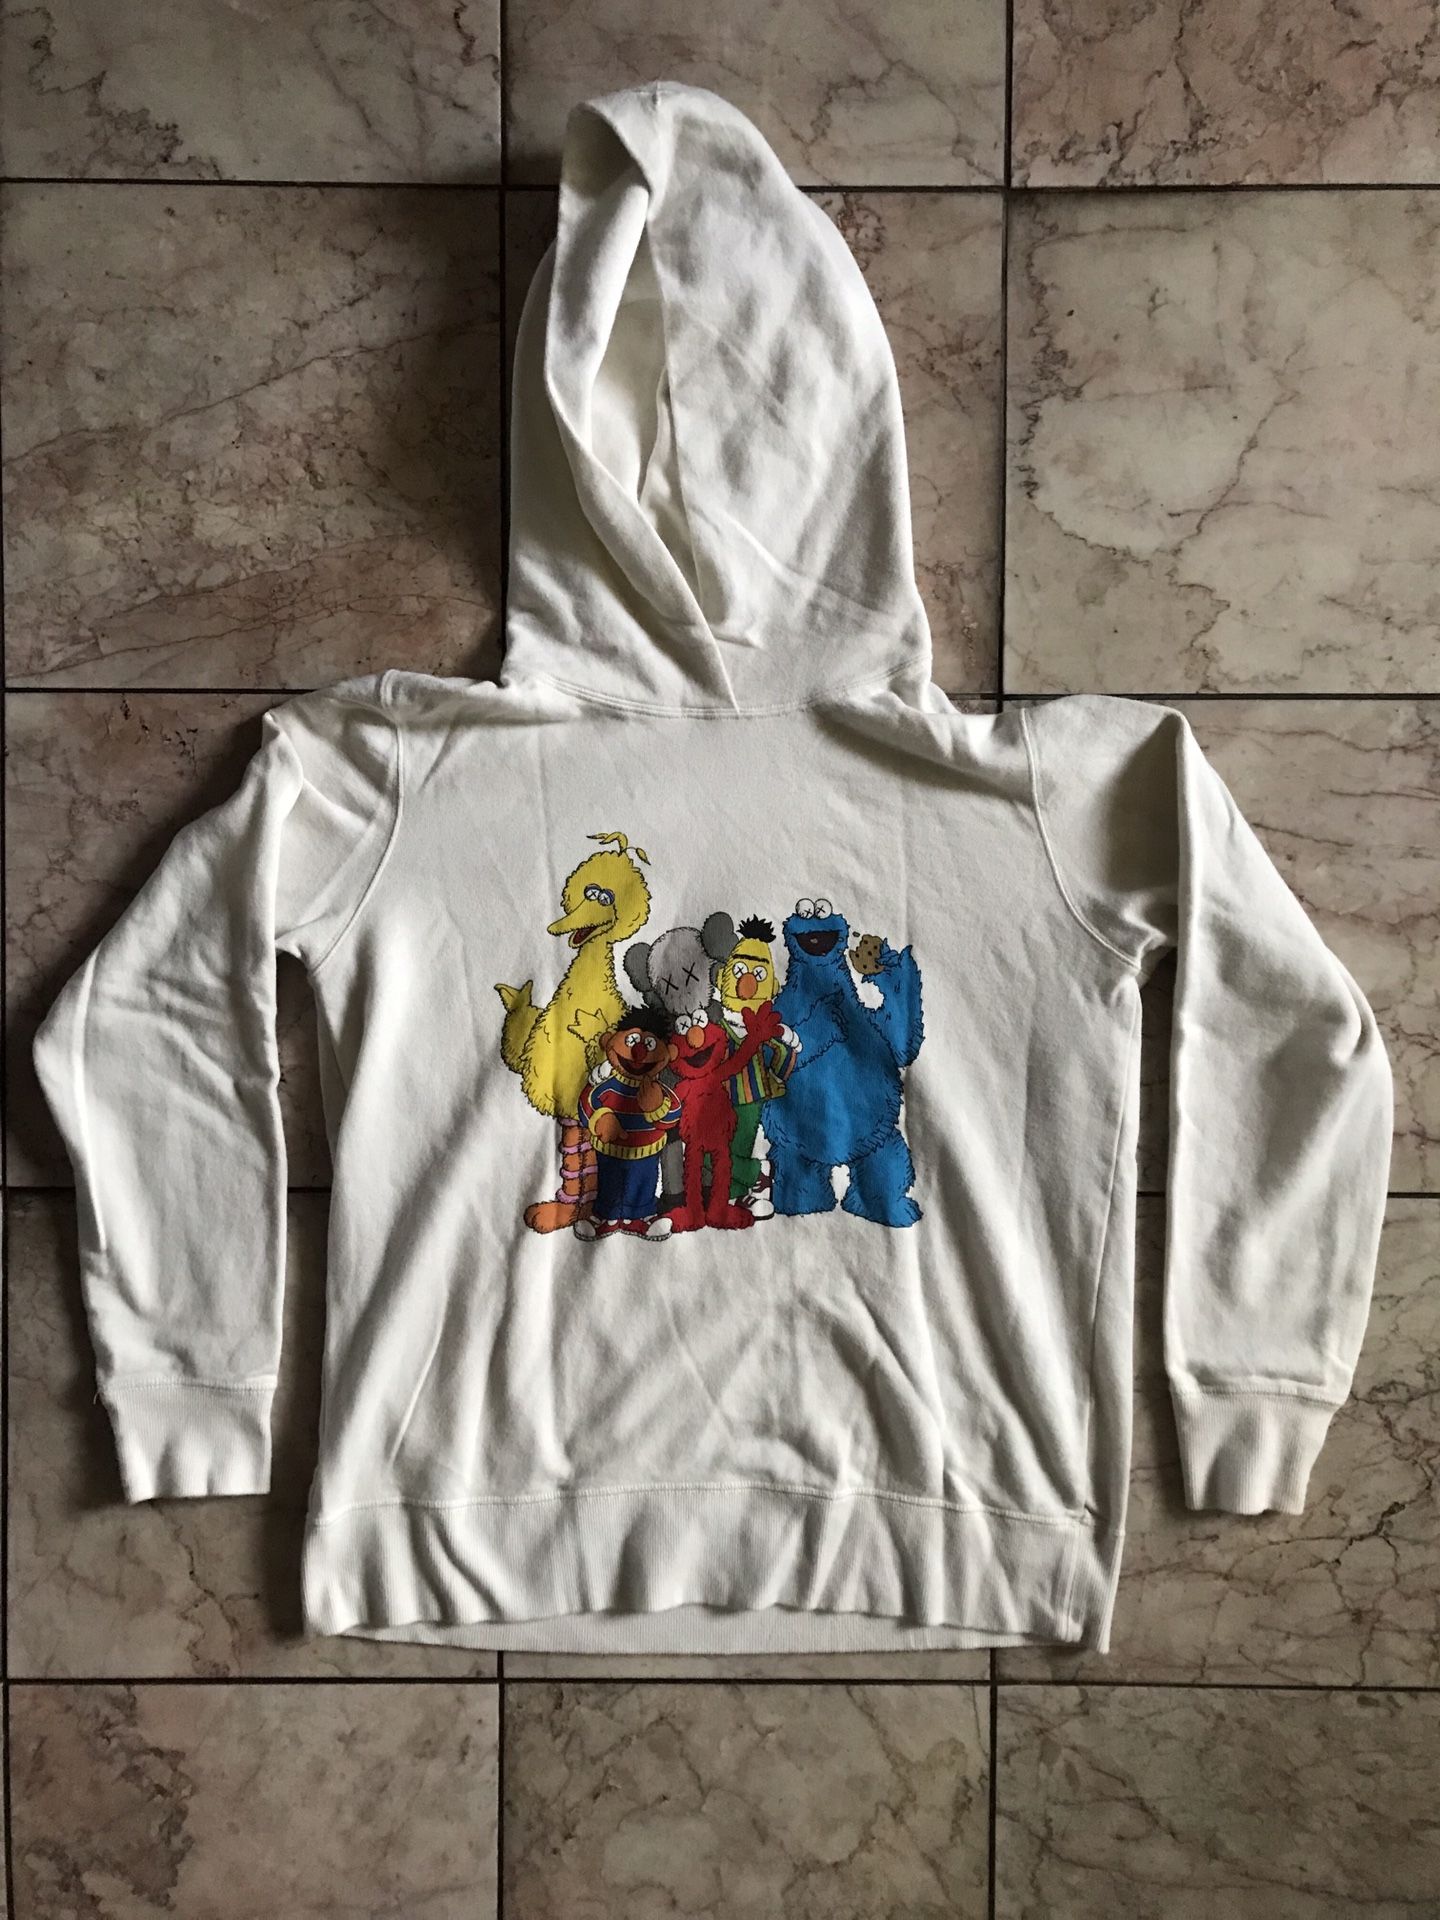 100% Authentic KAWS x Sesame Street for Uniqlo Hooded Sweatshirt